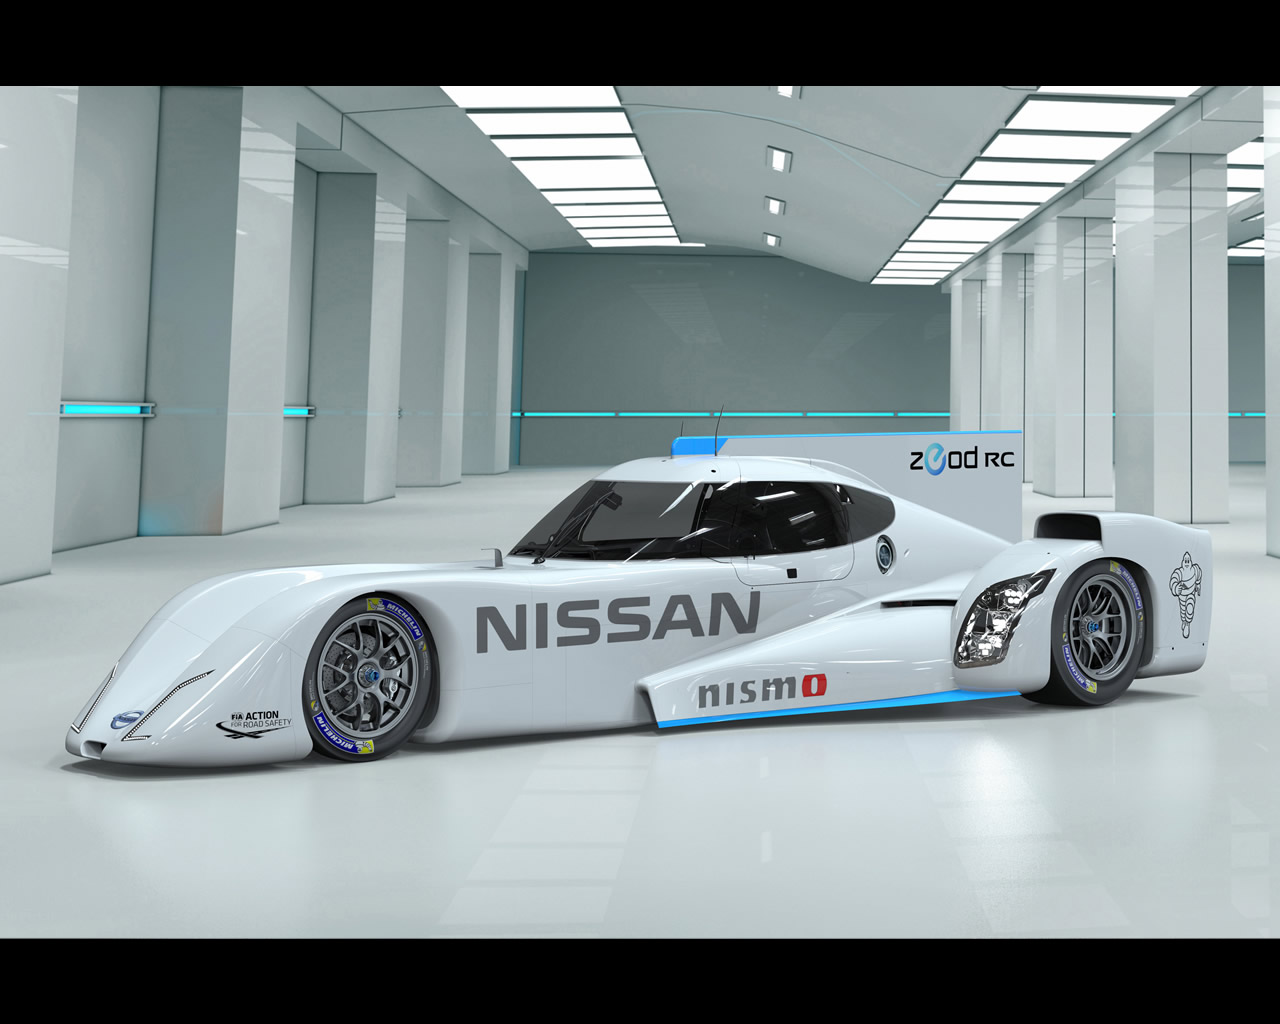 Nissan hybrid electric vehicle #1